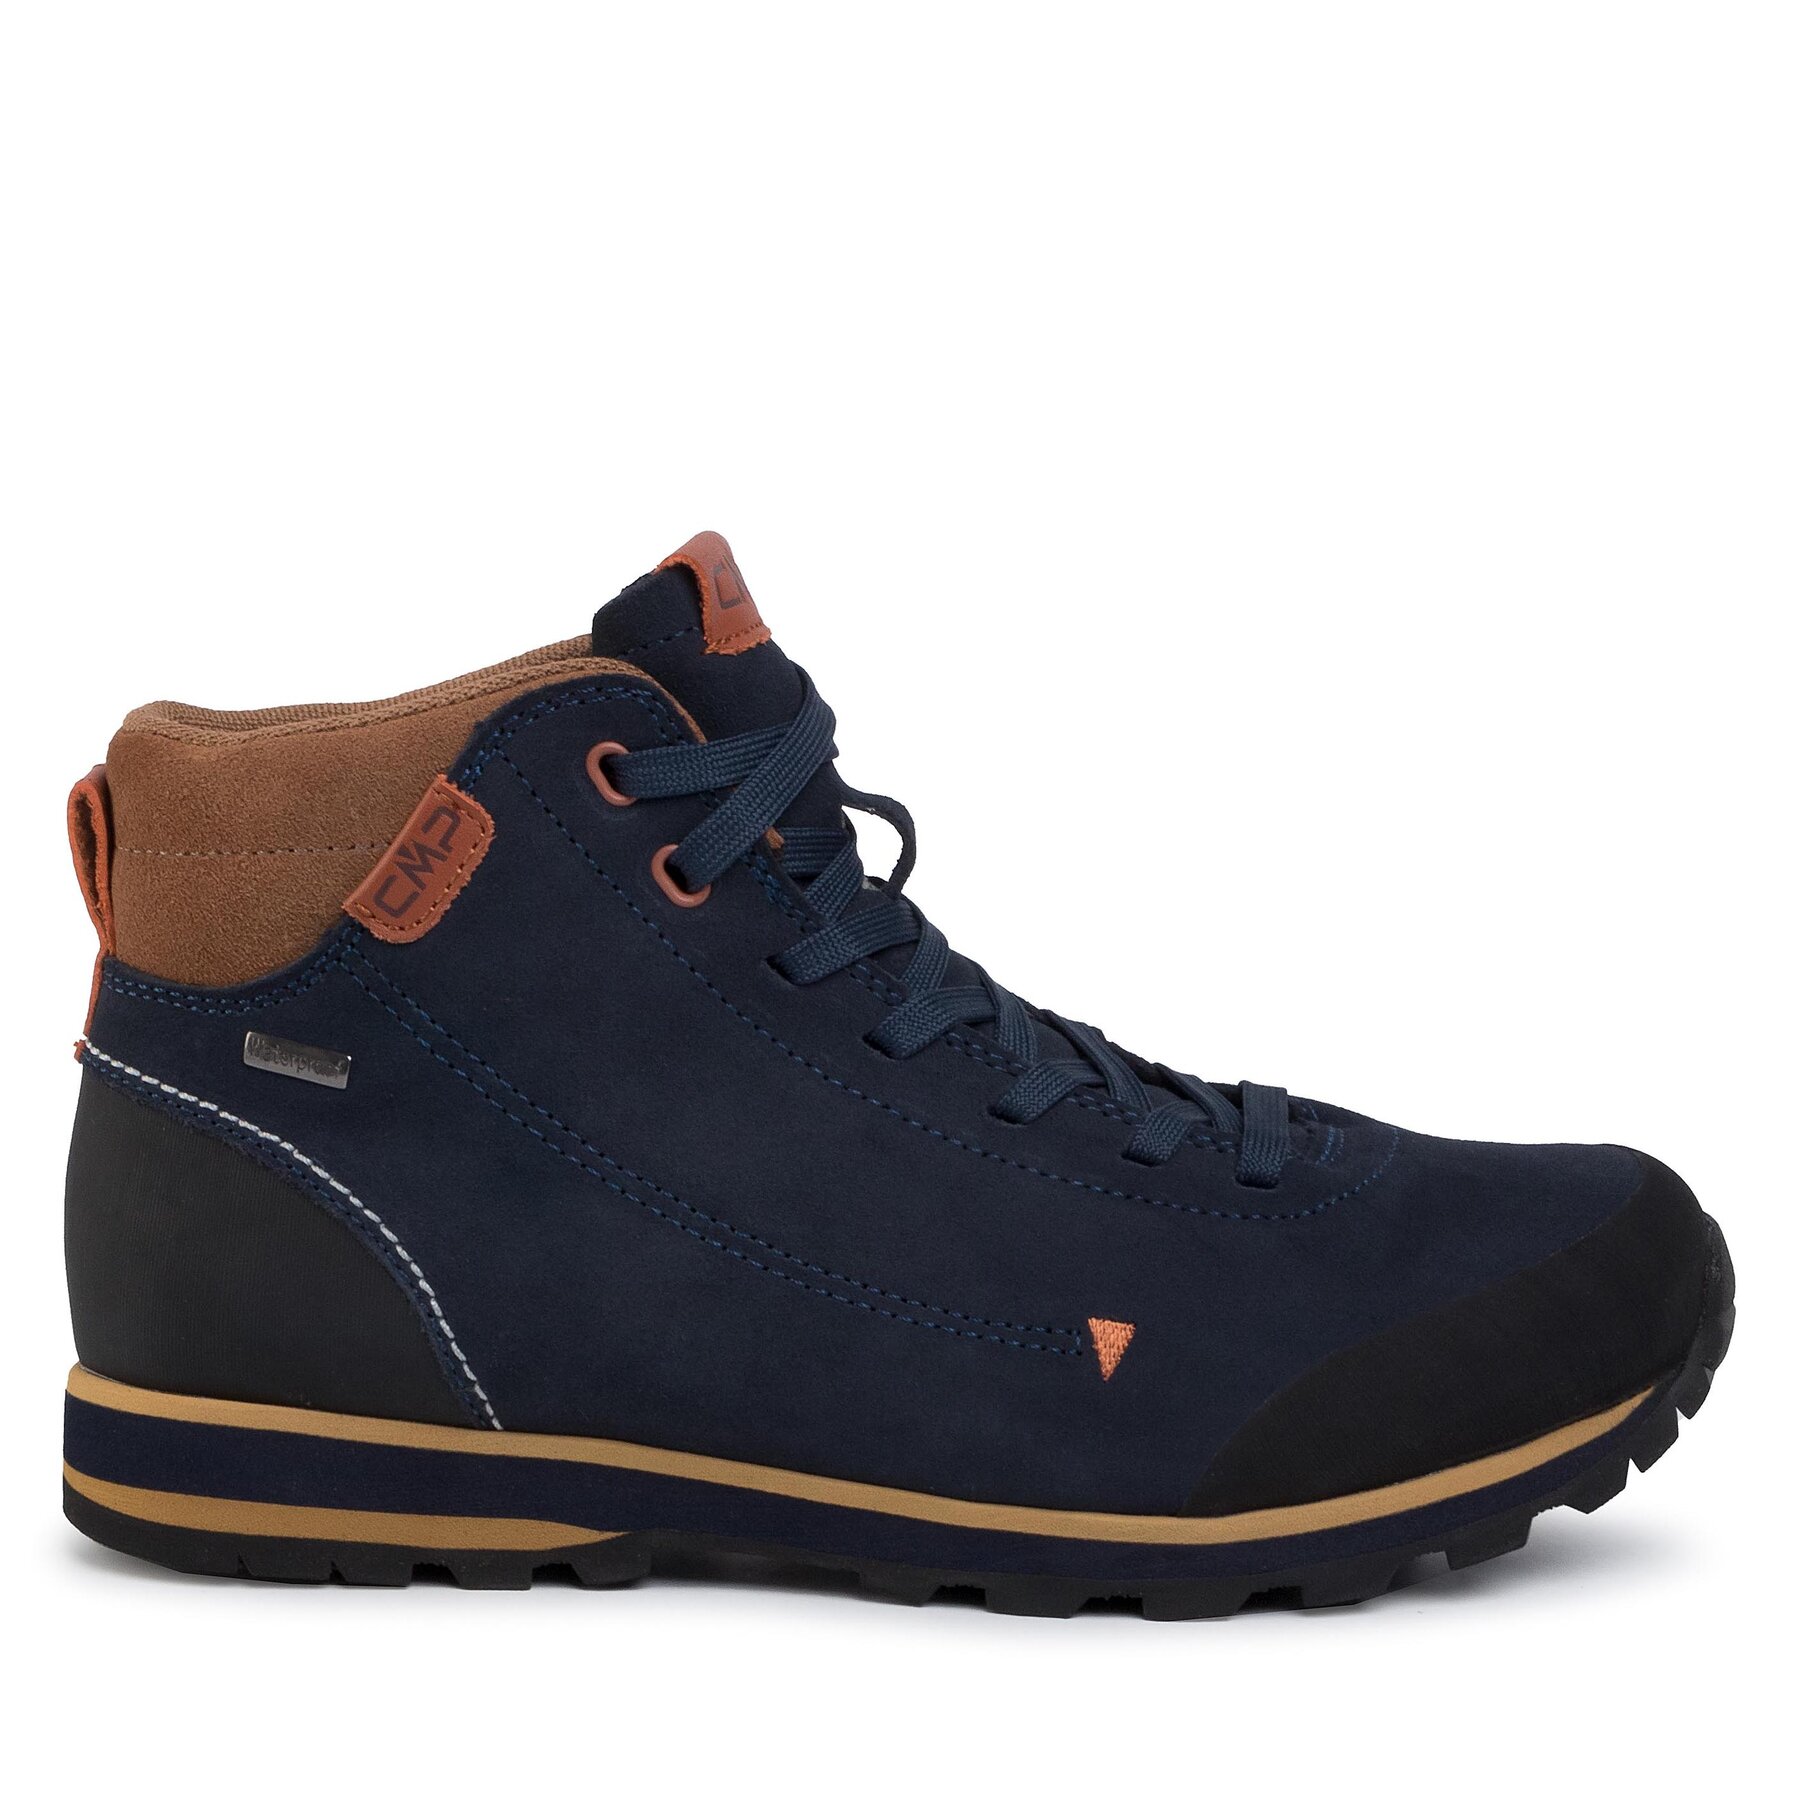 Trekkingschuhe CMP Elettra Mid Hiking Shoes Wp 38Q4597 Black Blue N950 von CMP